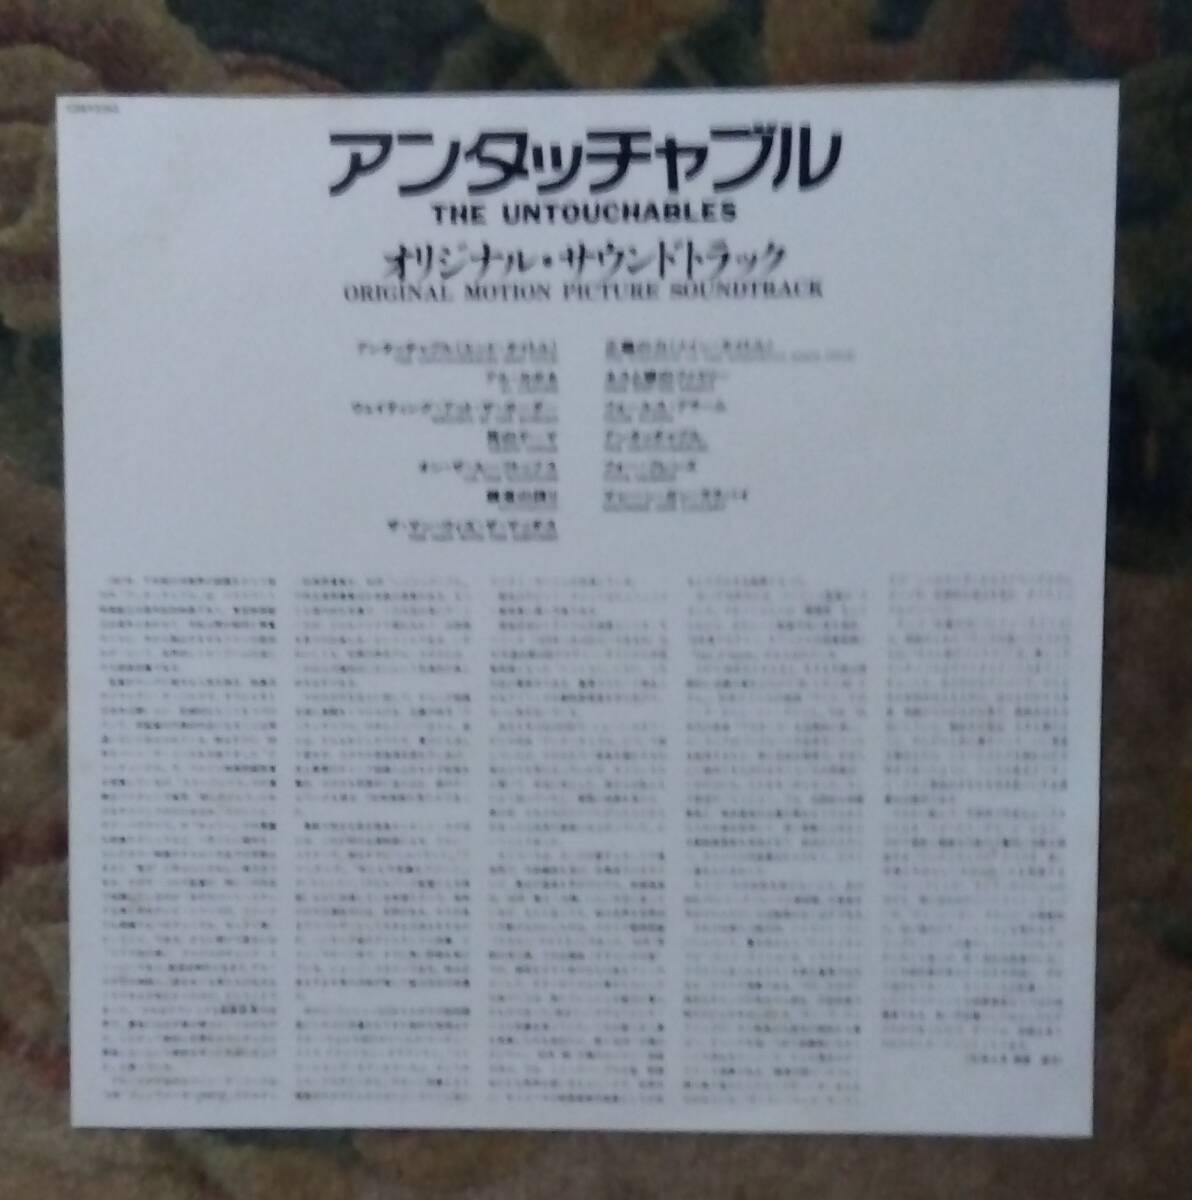  Anne Touch .bru фильм саундтрек LP записано в Японии ennyomo Ricoh ne